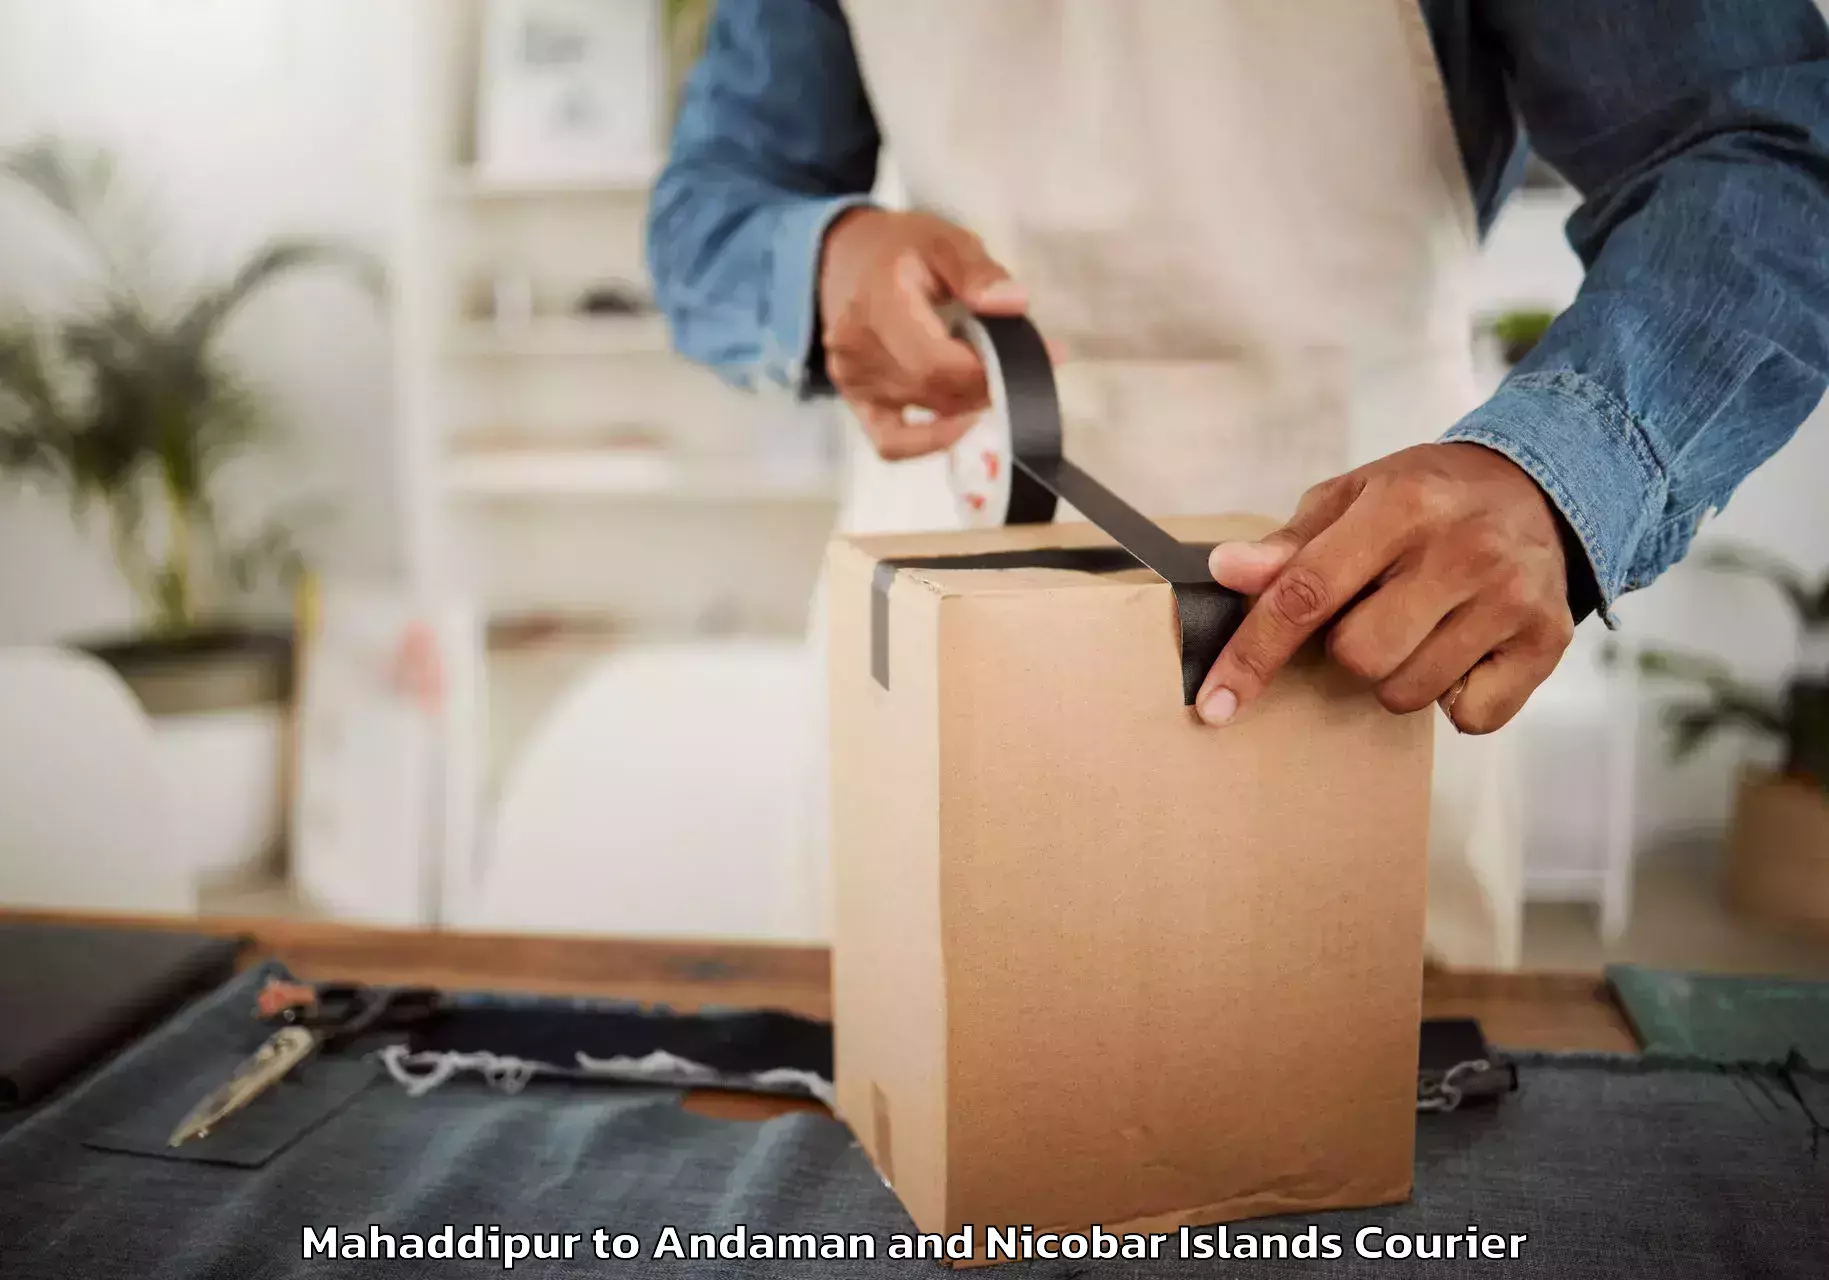 Furniture moving and handling in Mahaddipur to Andaman and Nicobar Islands